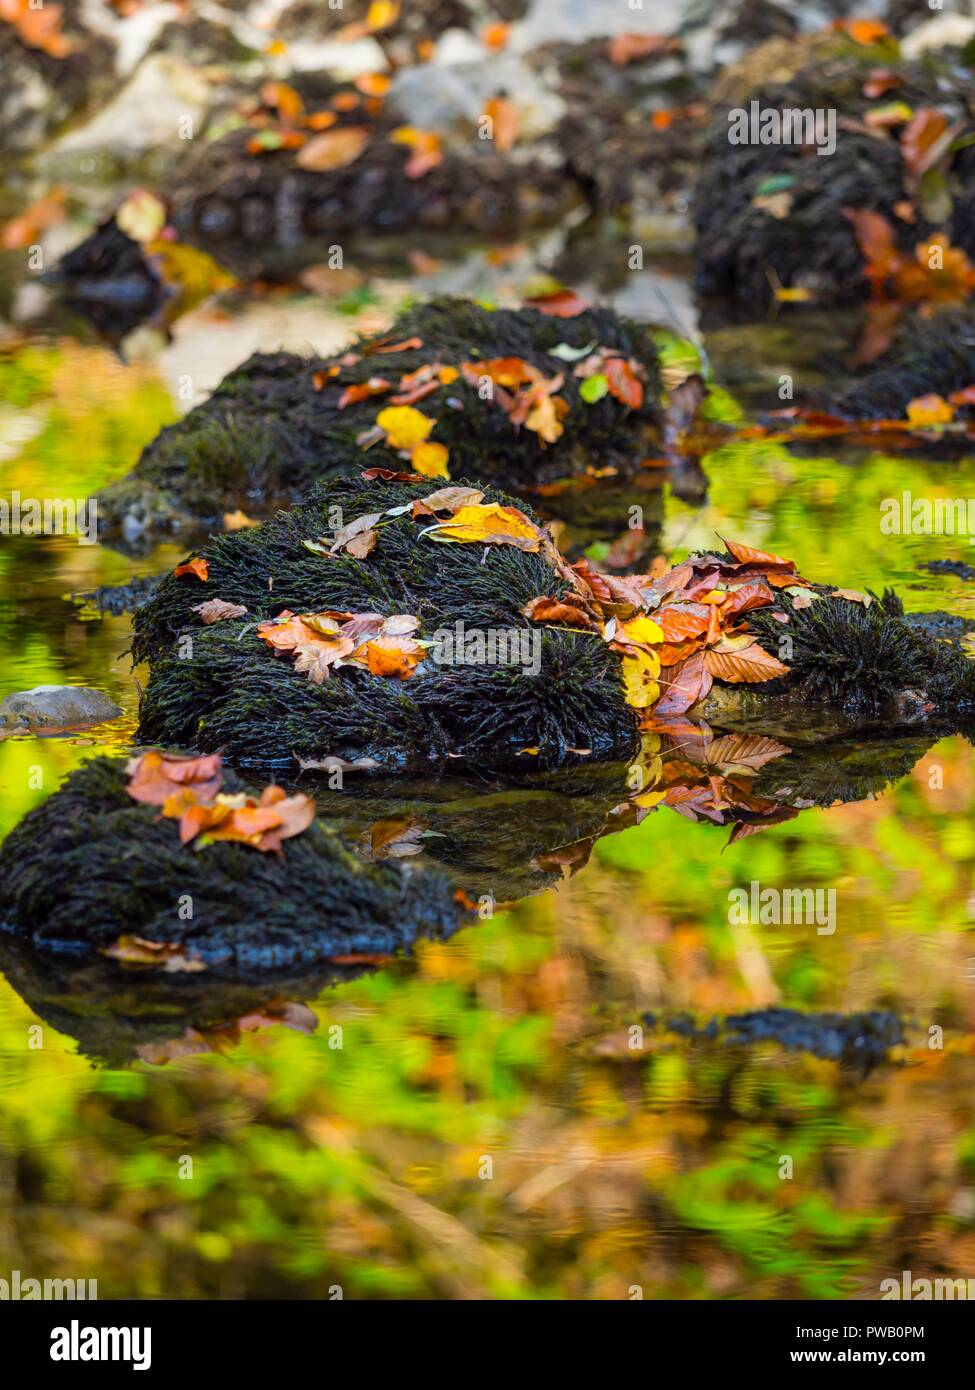 Autumn scenery in nature fallen leaves on rocks Stock Photo